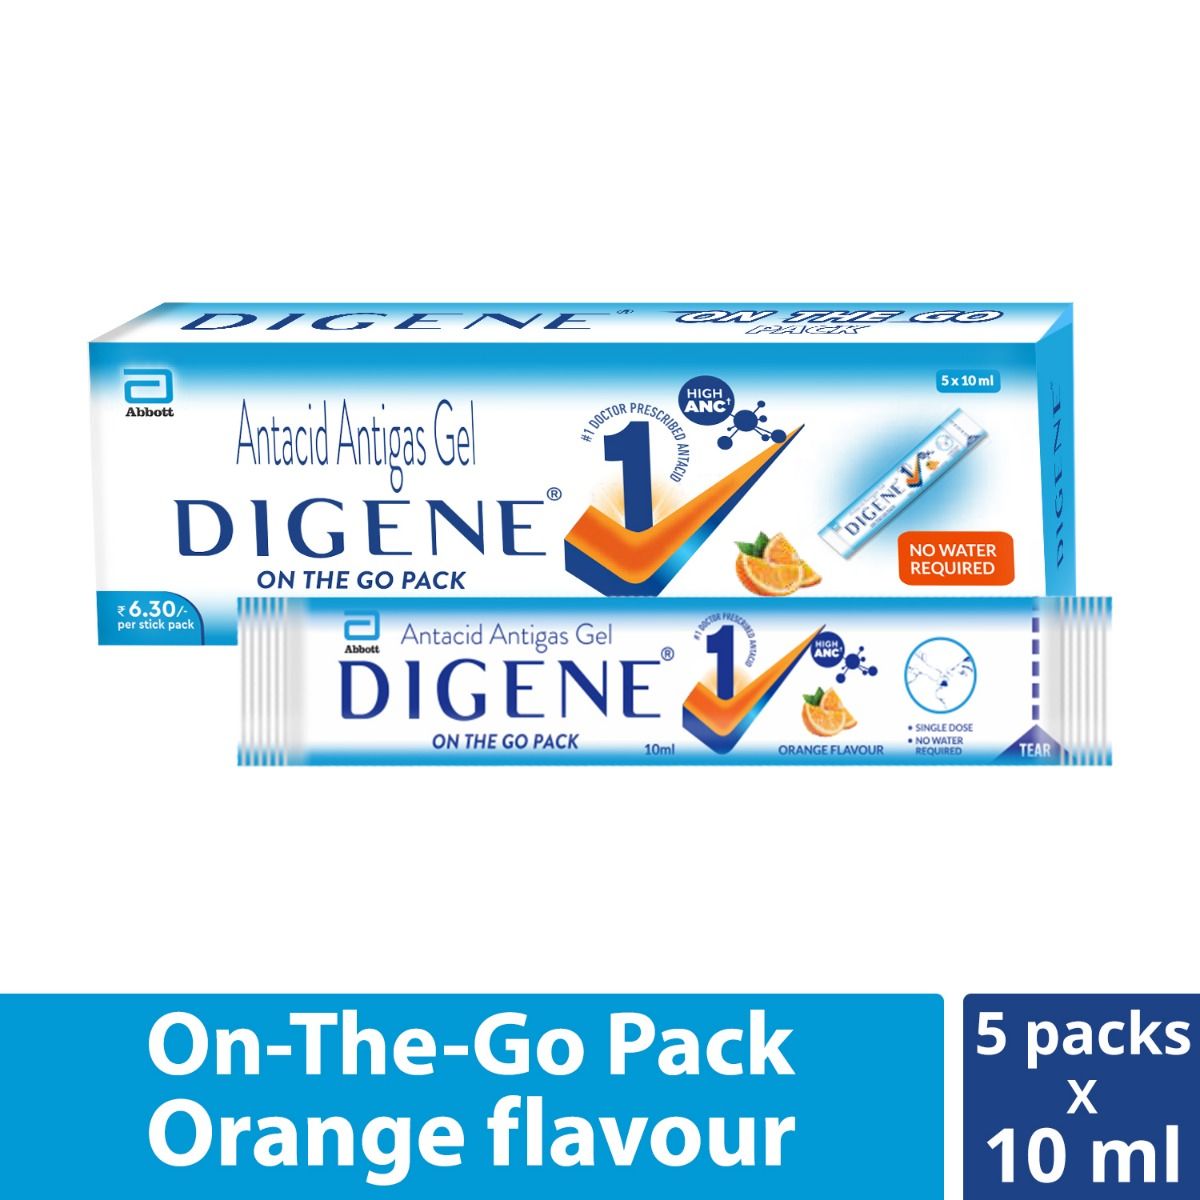 Buy Digene On The Go Pack Orange Flavour Antacid Antigas Gel, 5x10 ml Online